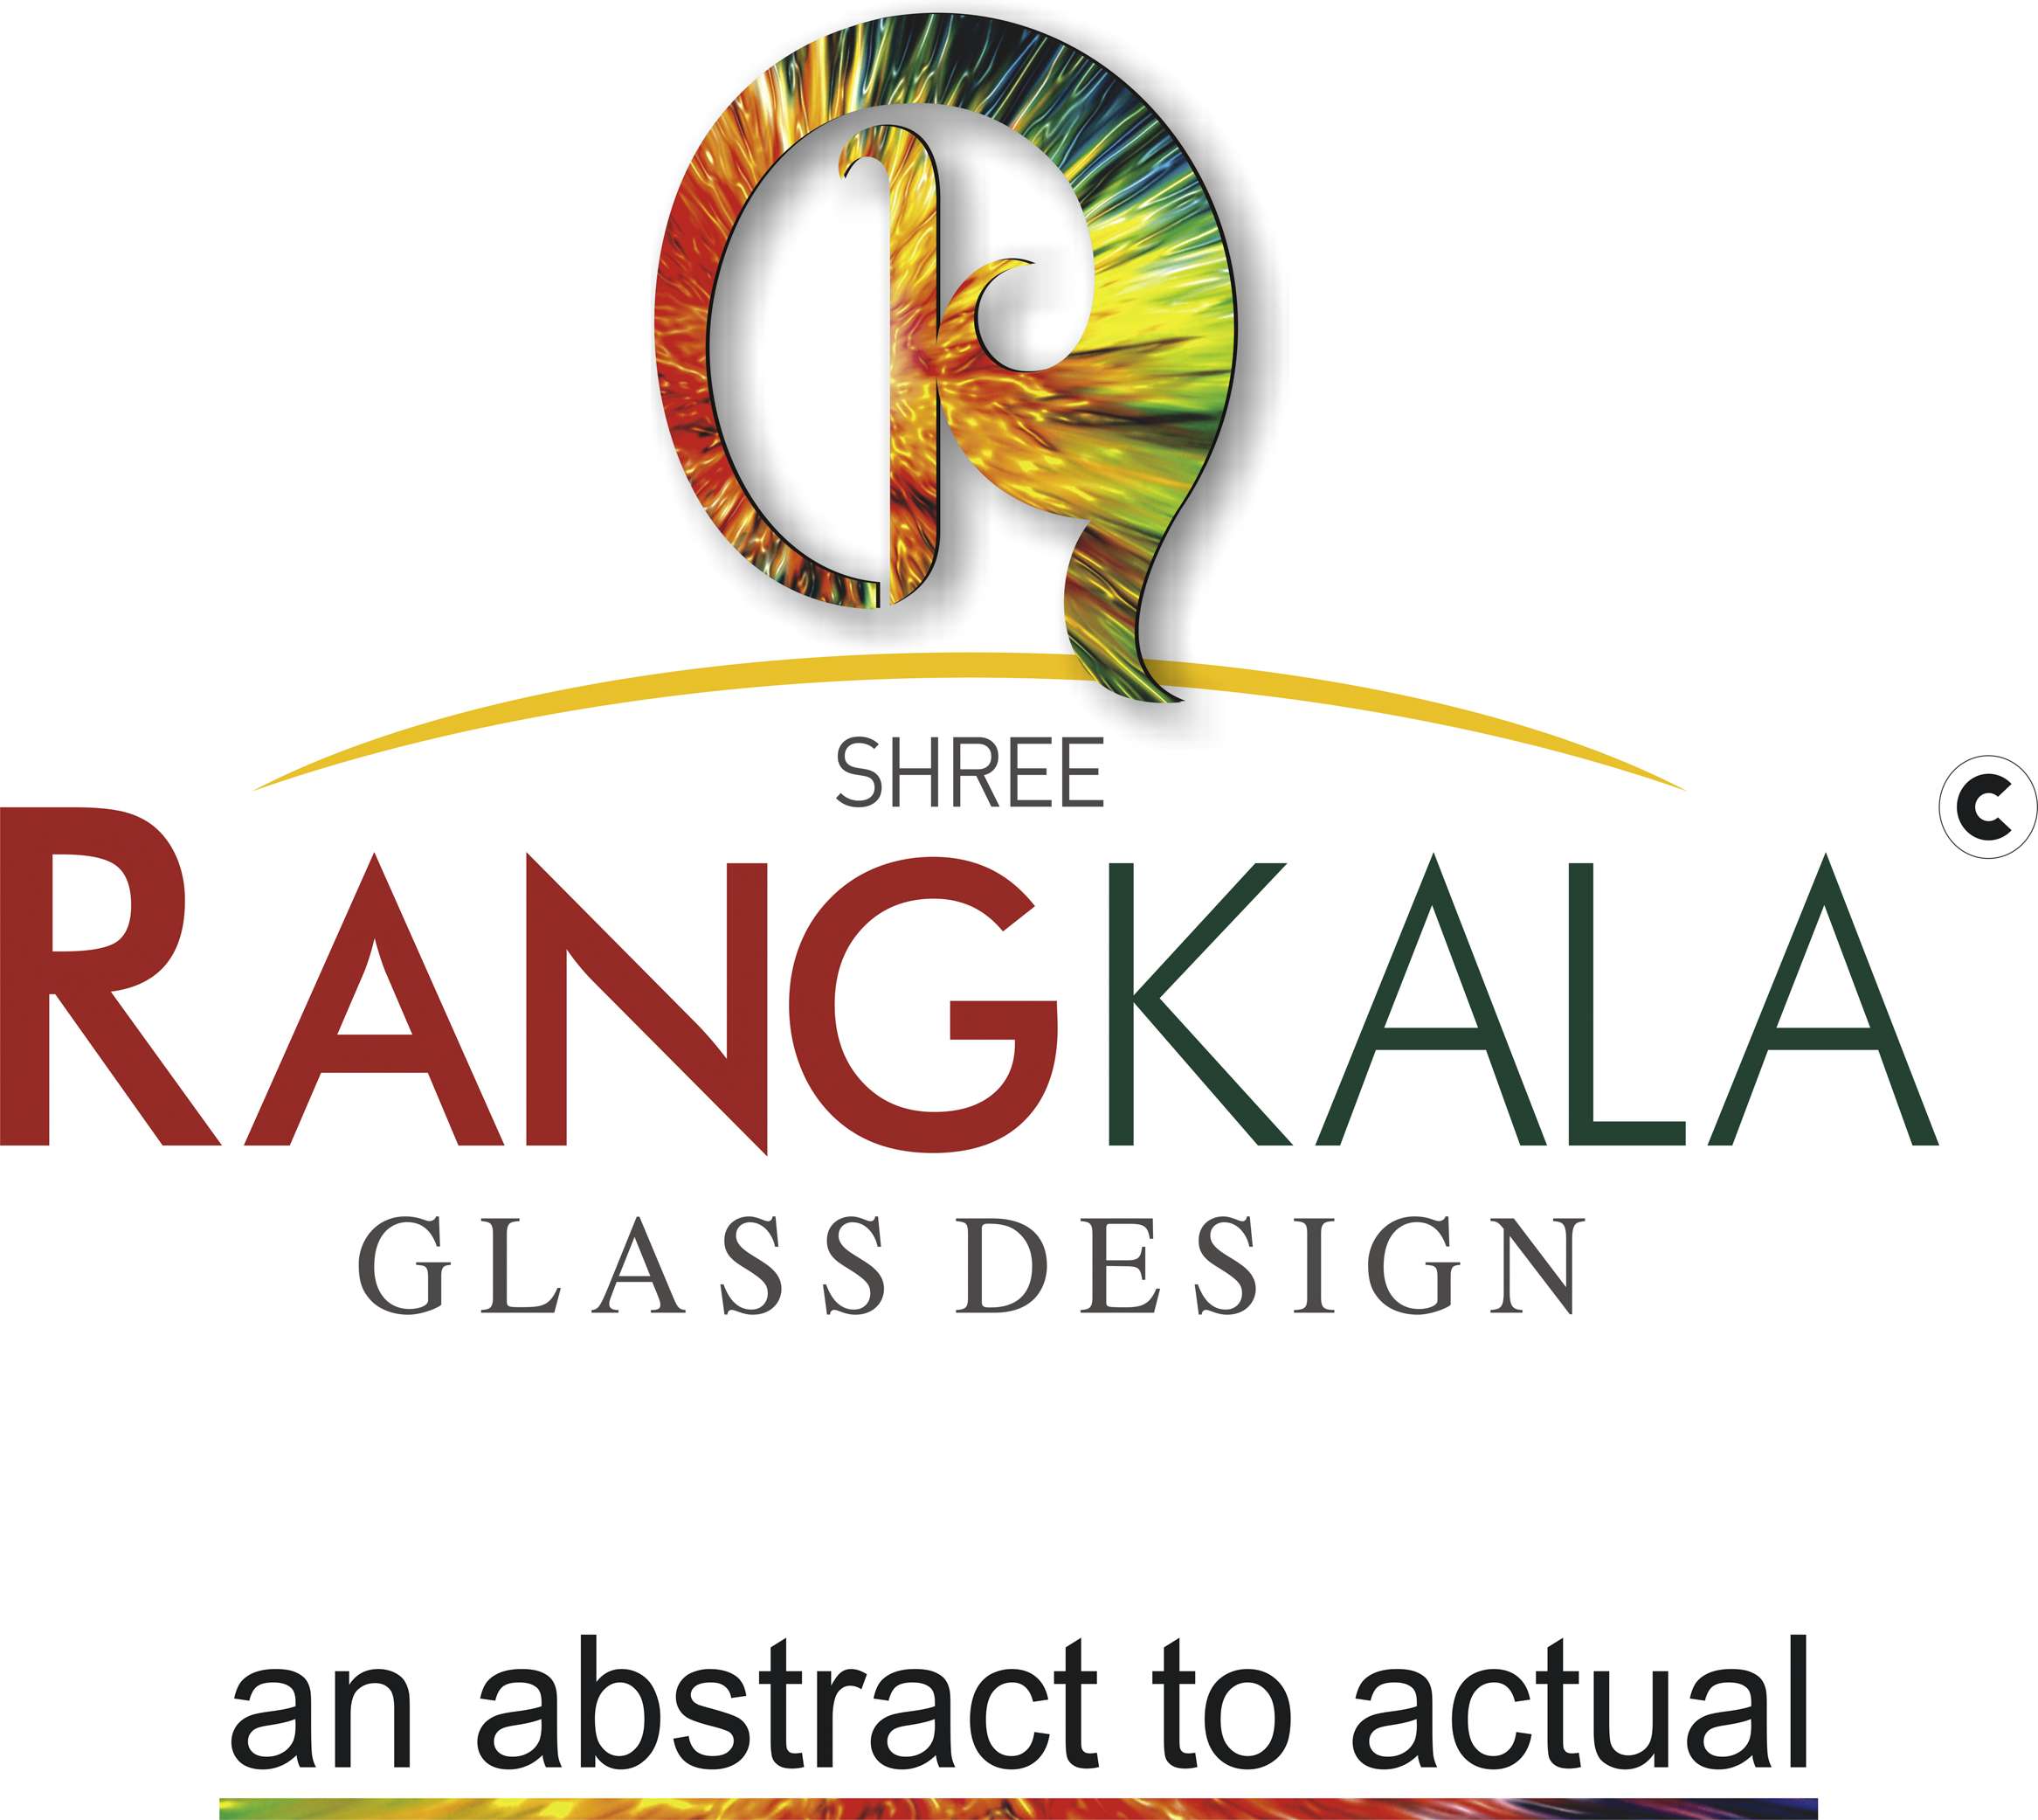 Shree Rangkala Glass Design Pvt Ltd